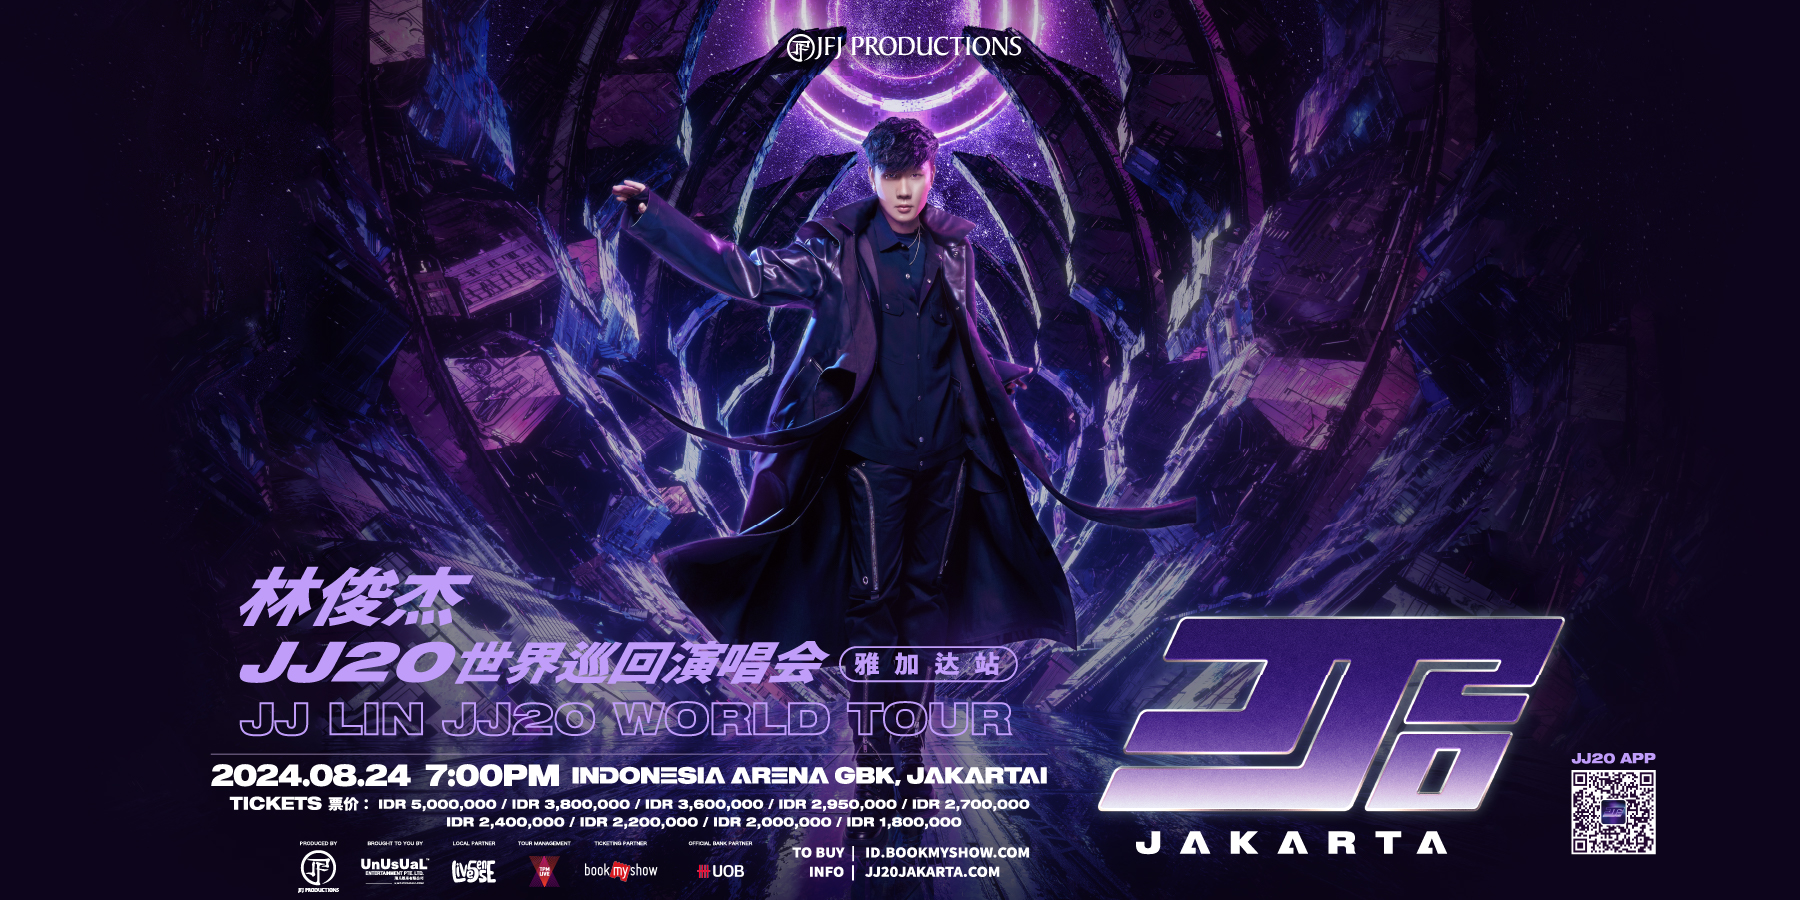 JJ Lin "JJ20" World Tour Jakarta